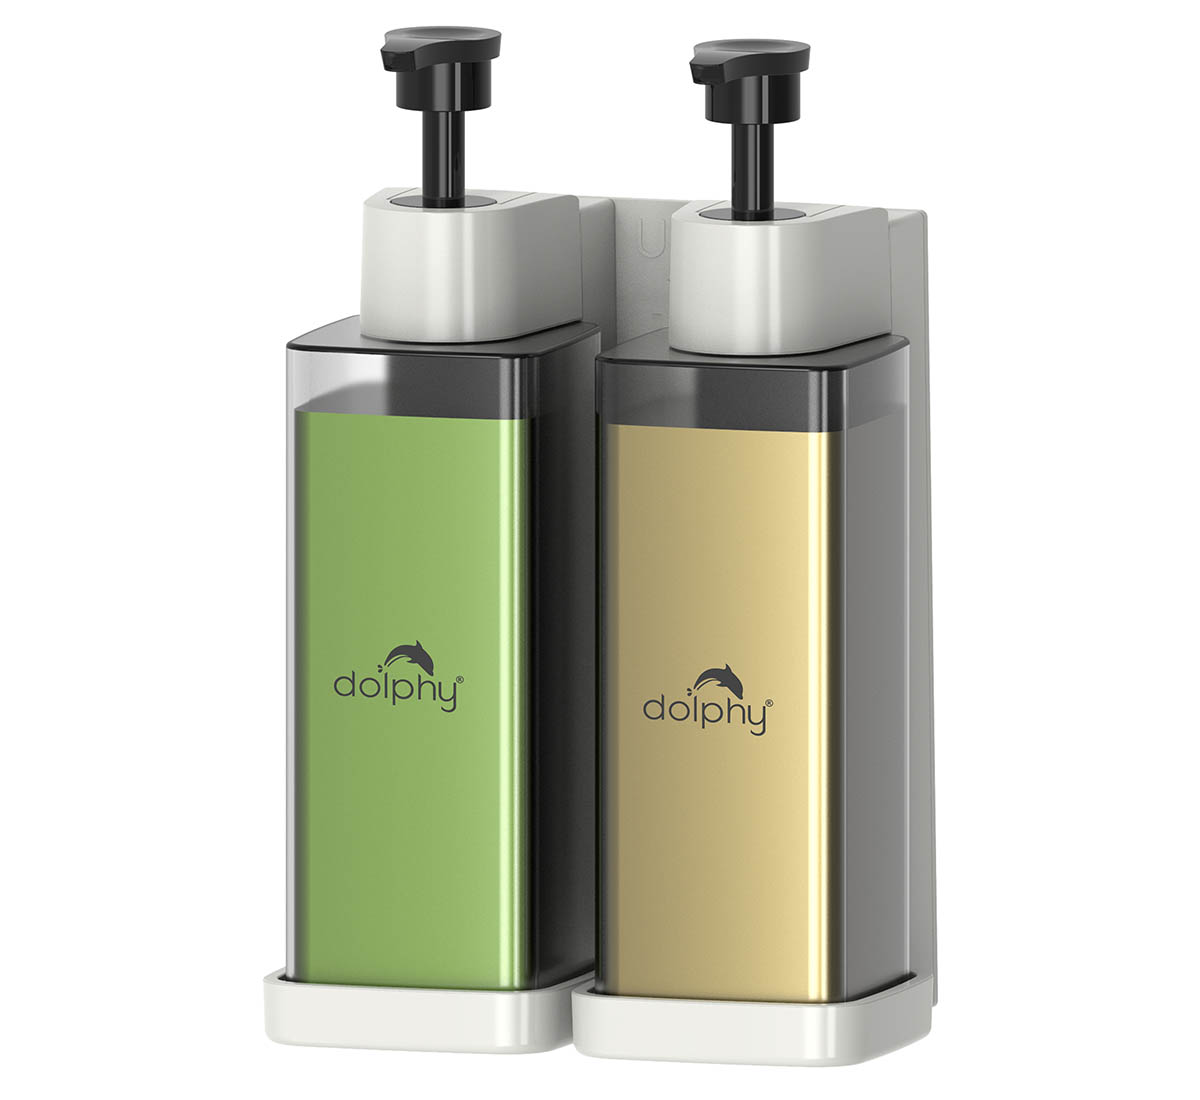 300 Manual Soap Dispenser Set of-2
